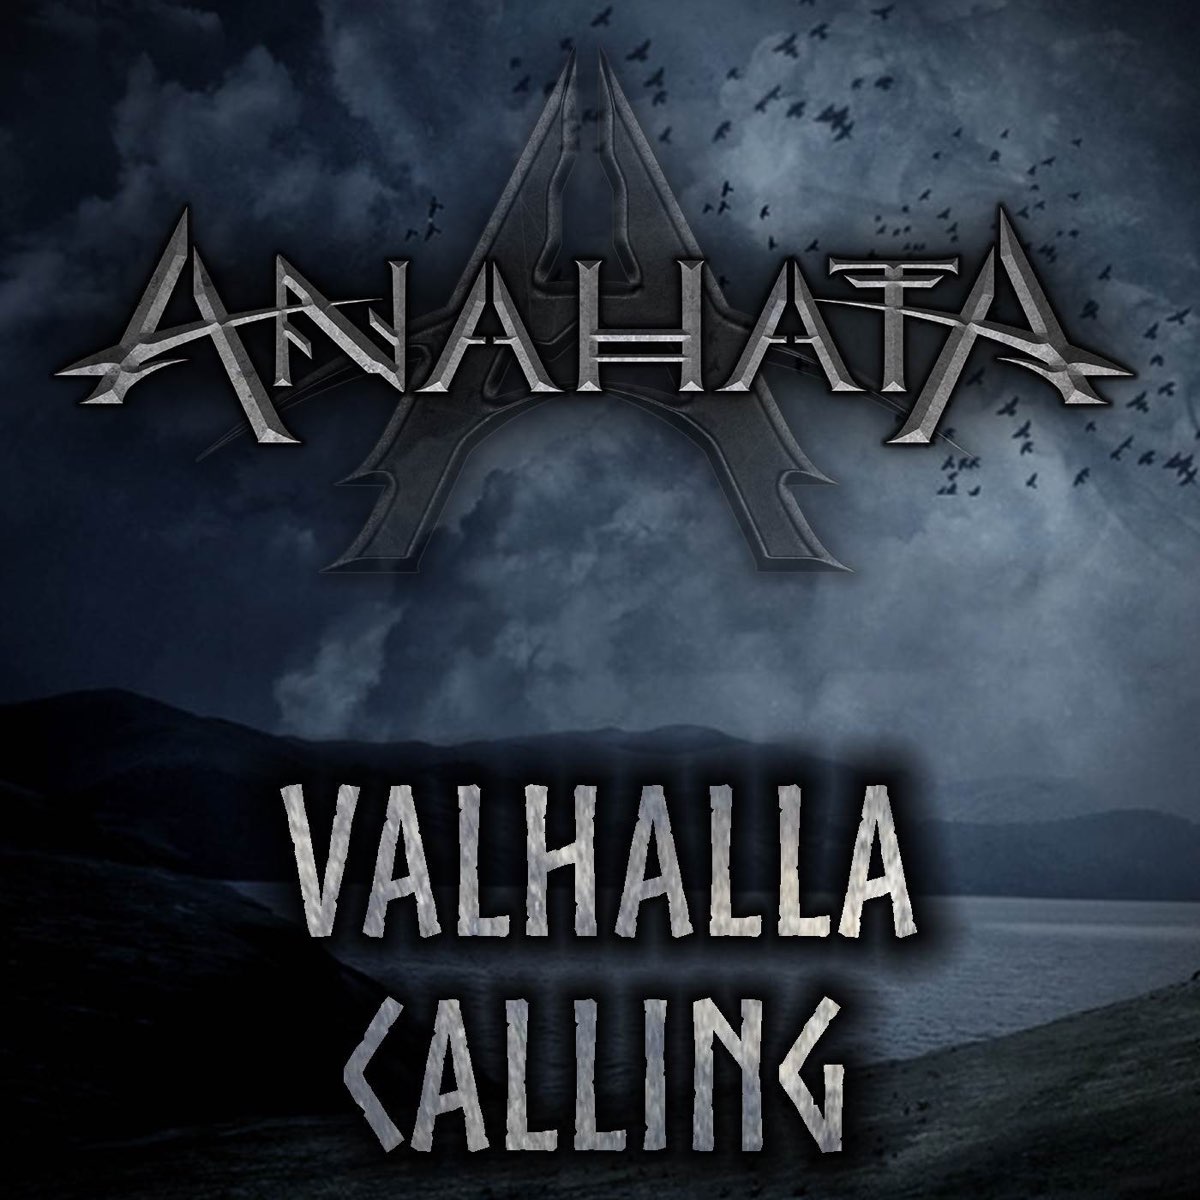 Valhalla calling песня